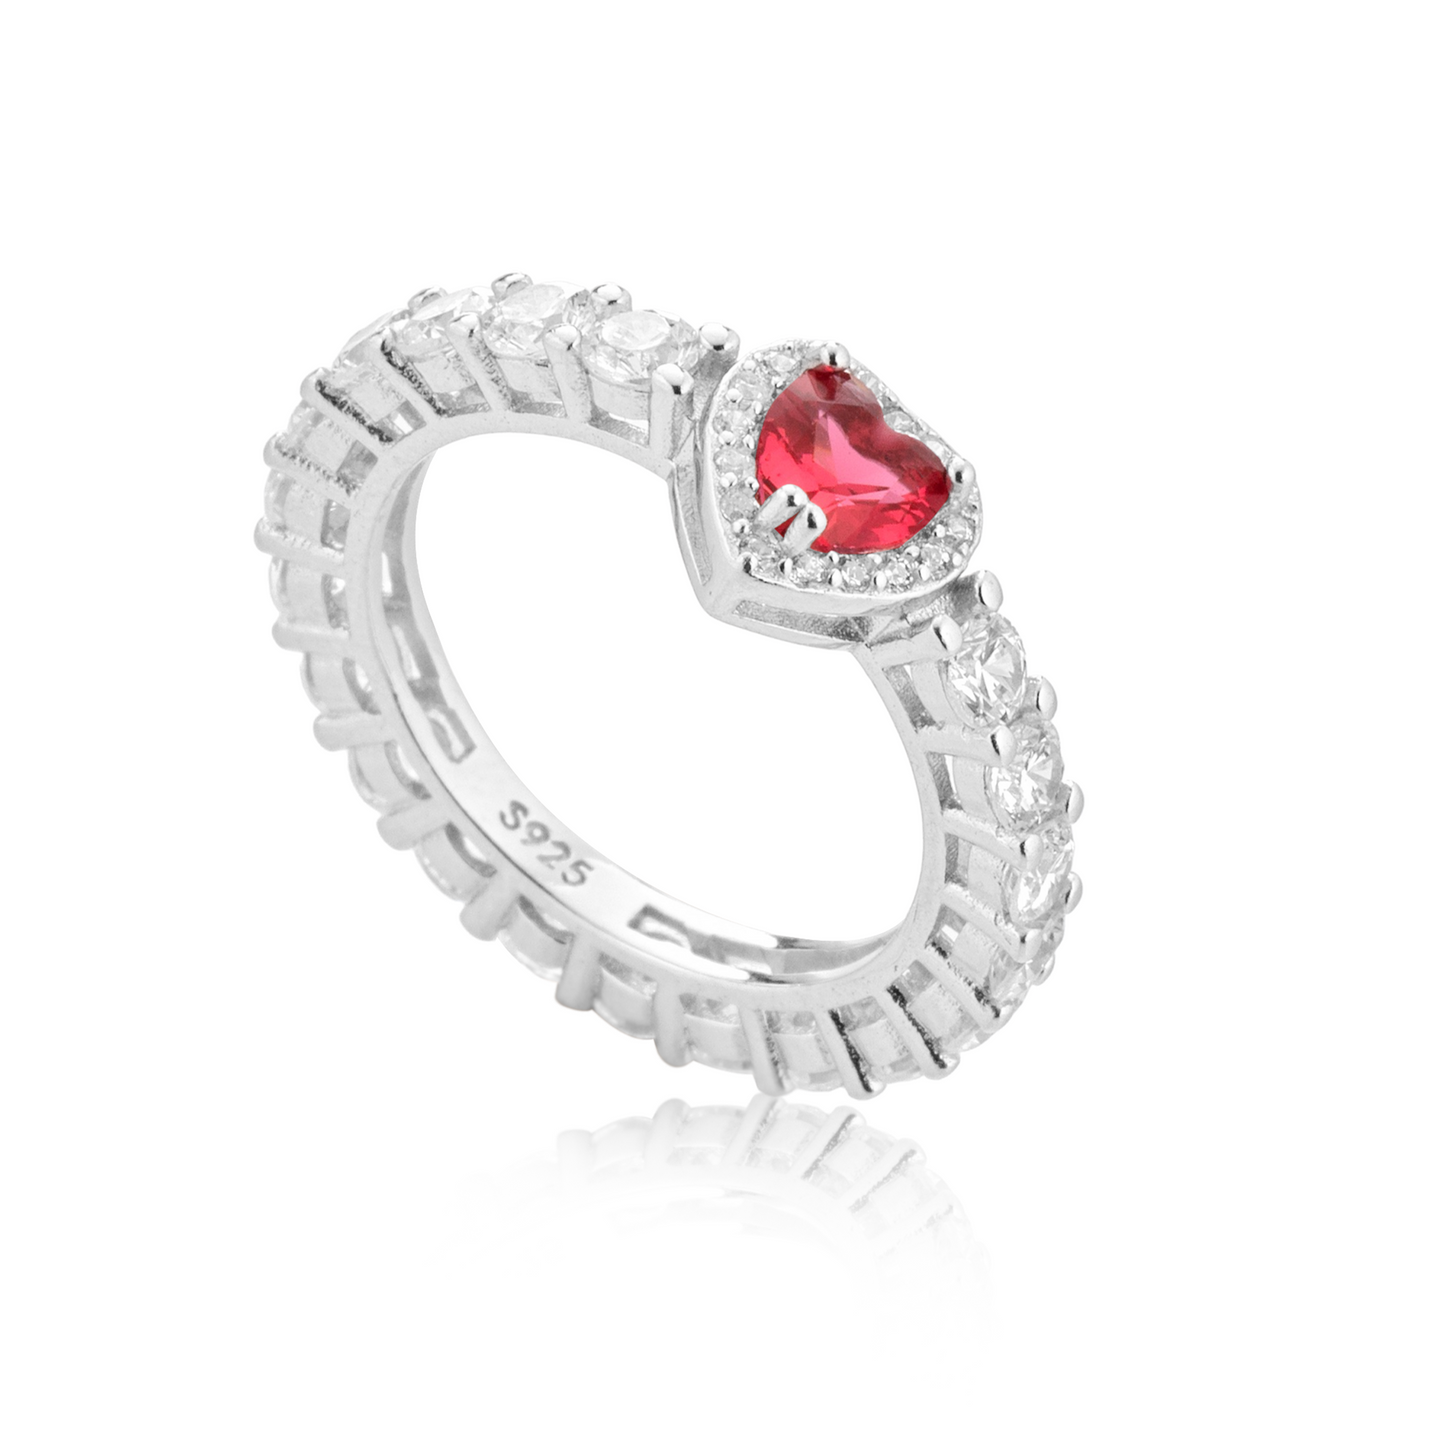 Heart tennis ring